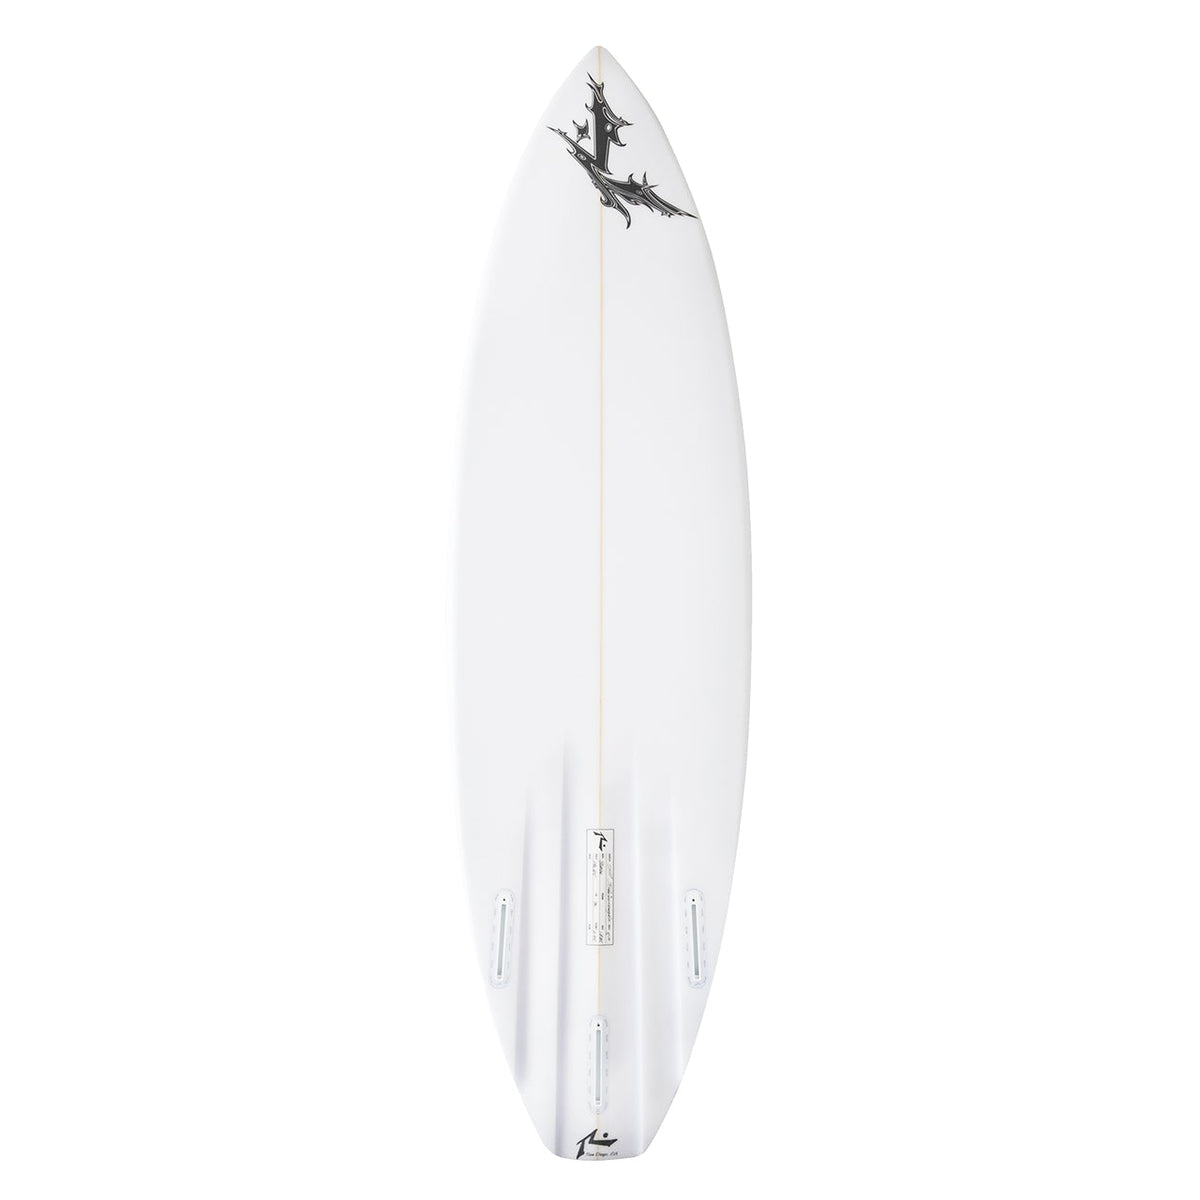 Blade w Channels Deck View - Bottom Surfboard